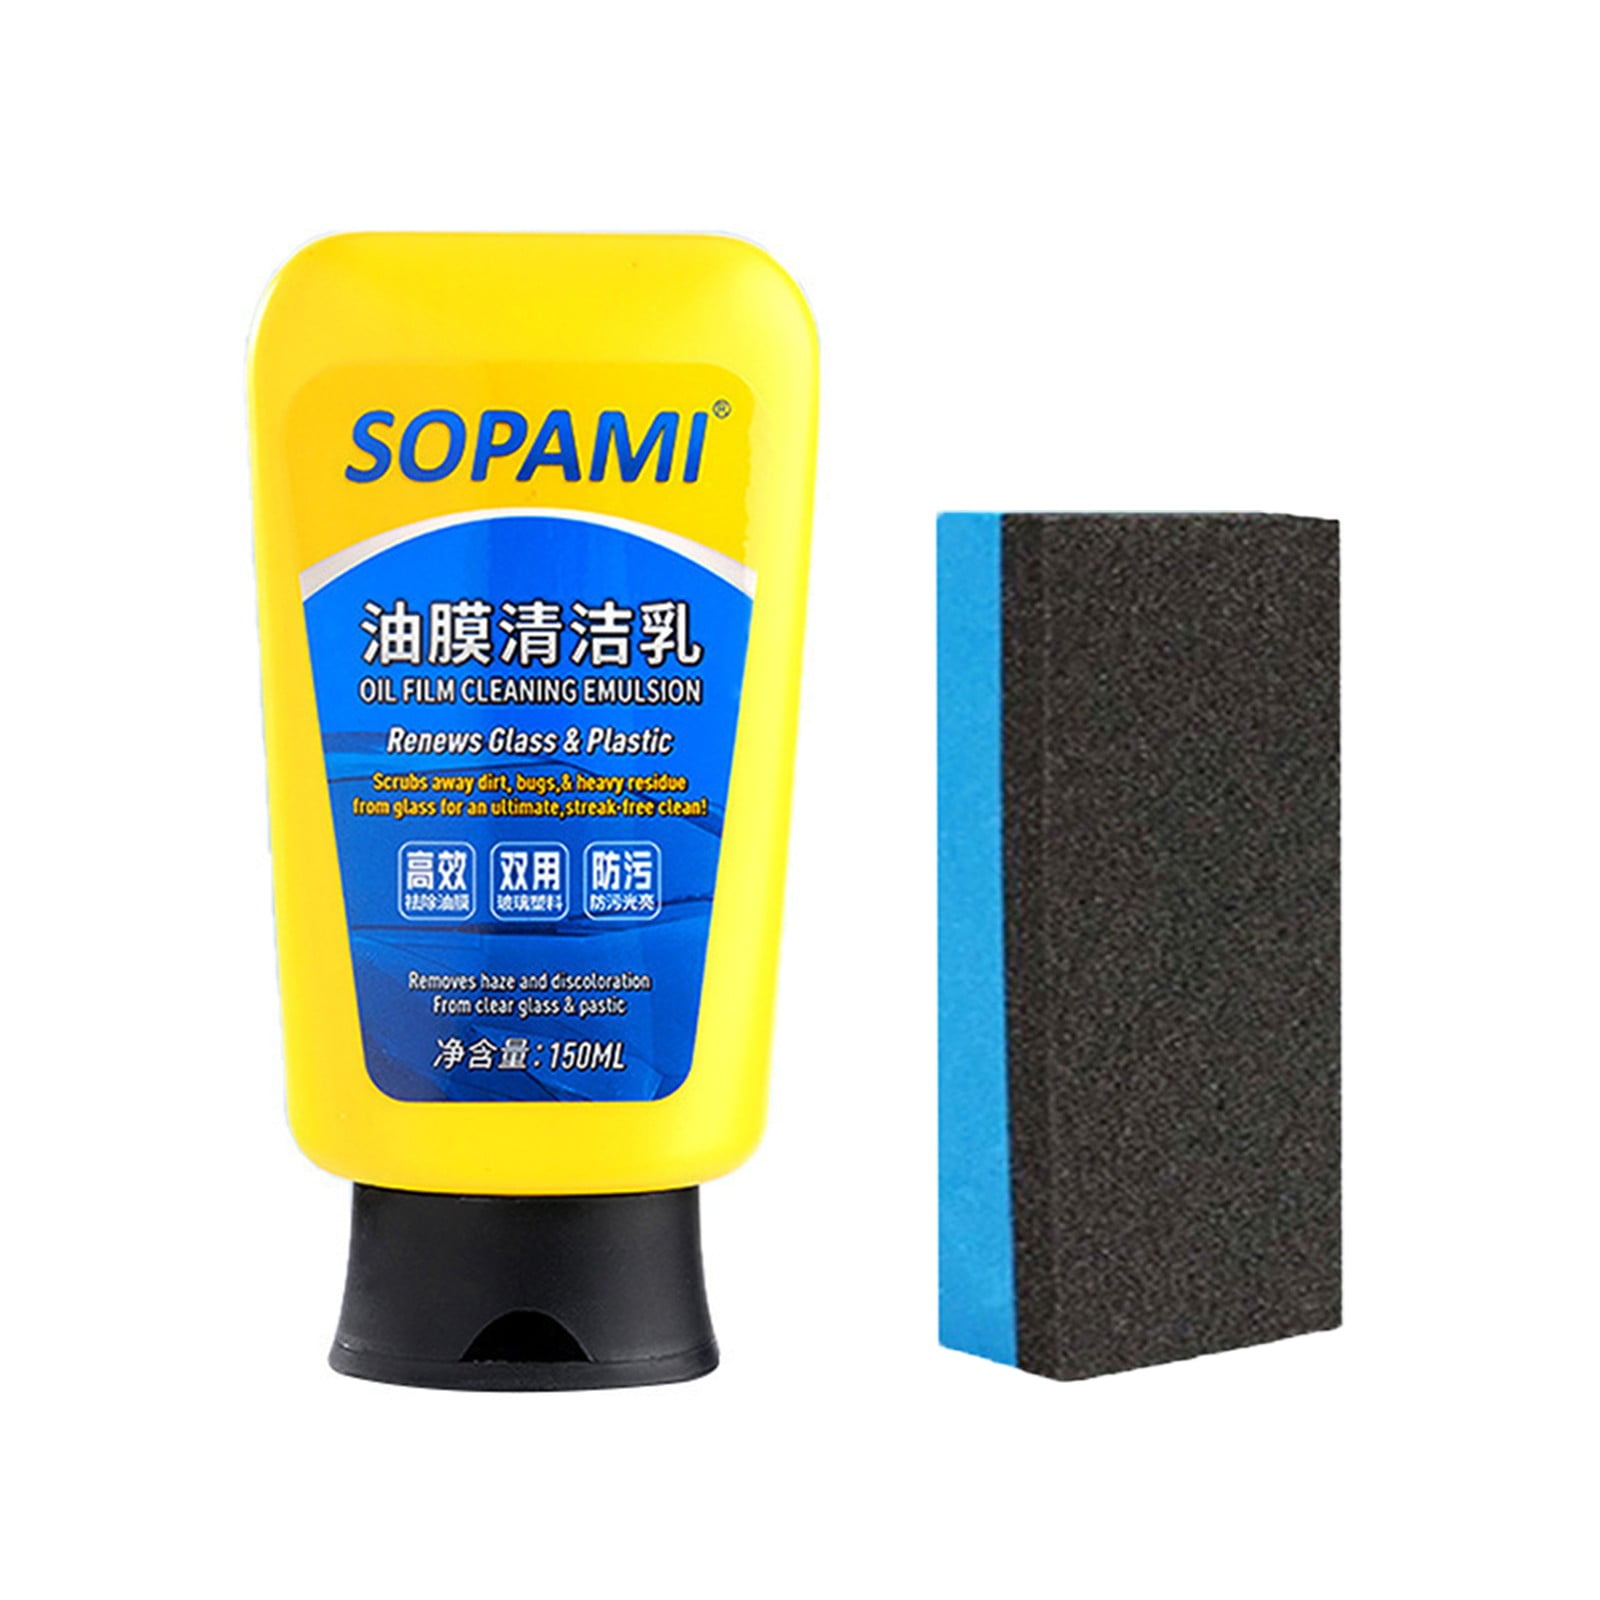 Sopami Car Coating Spray, Sopami Oil Film Cleaning Emulsion 150ml